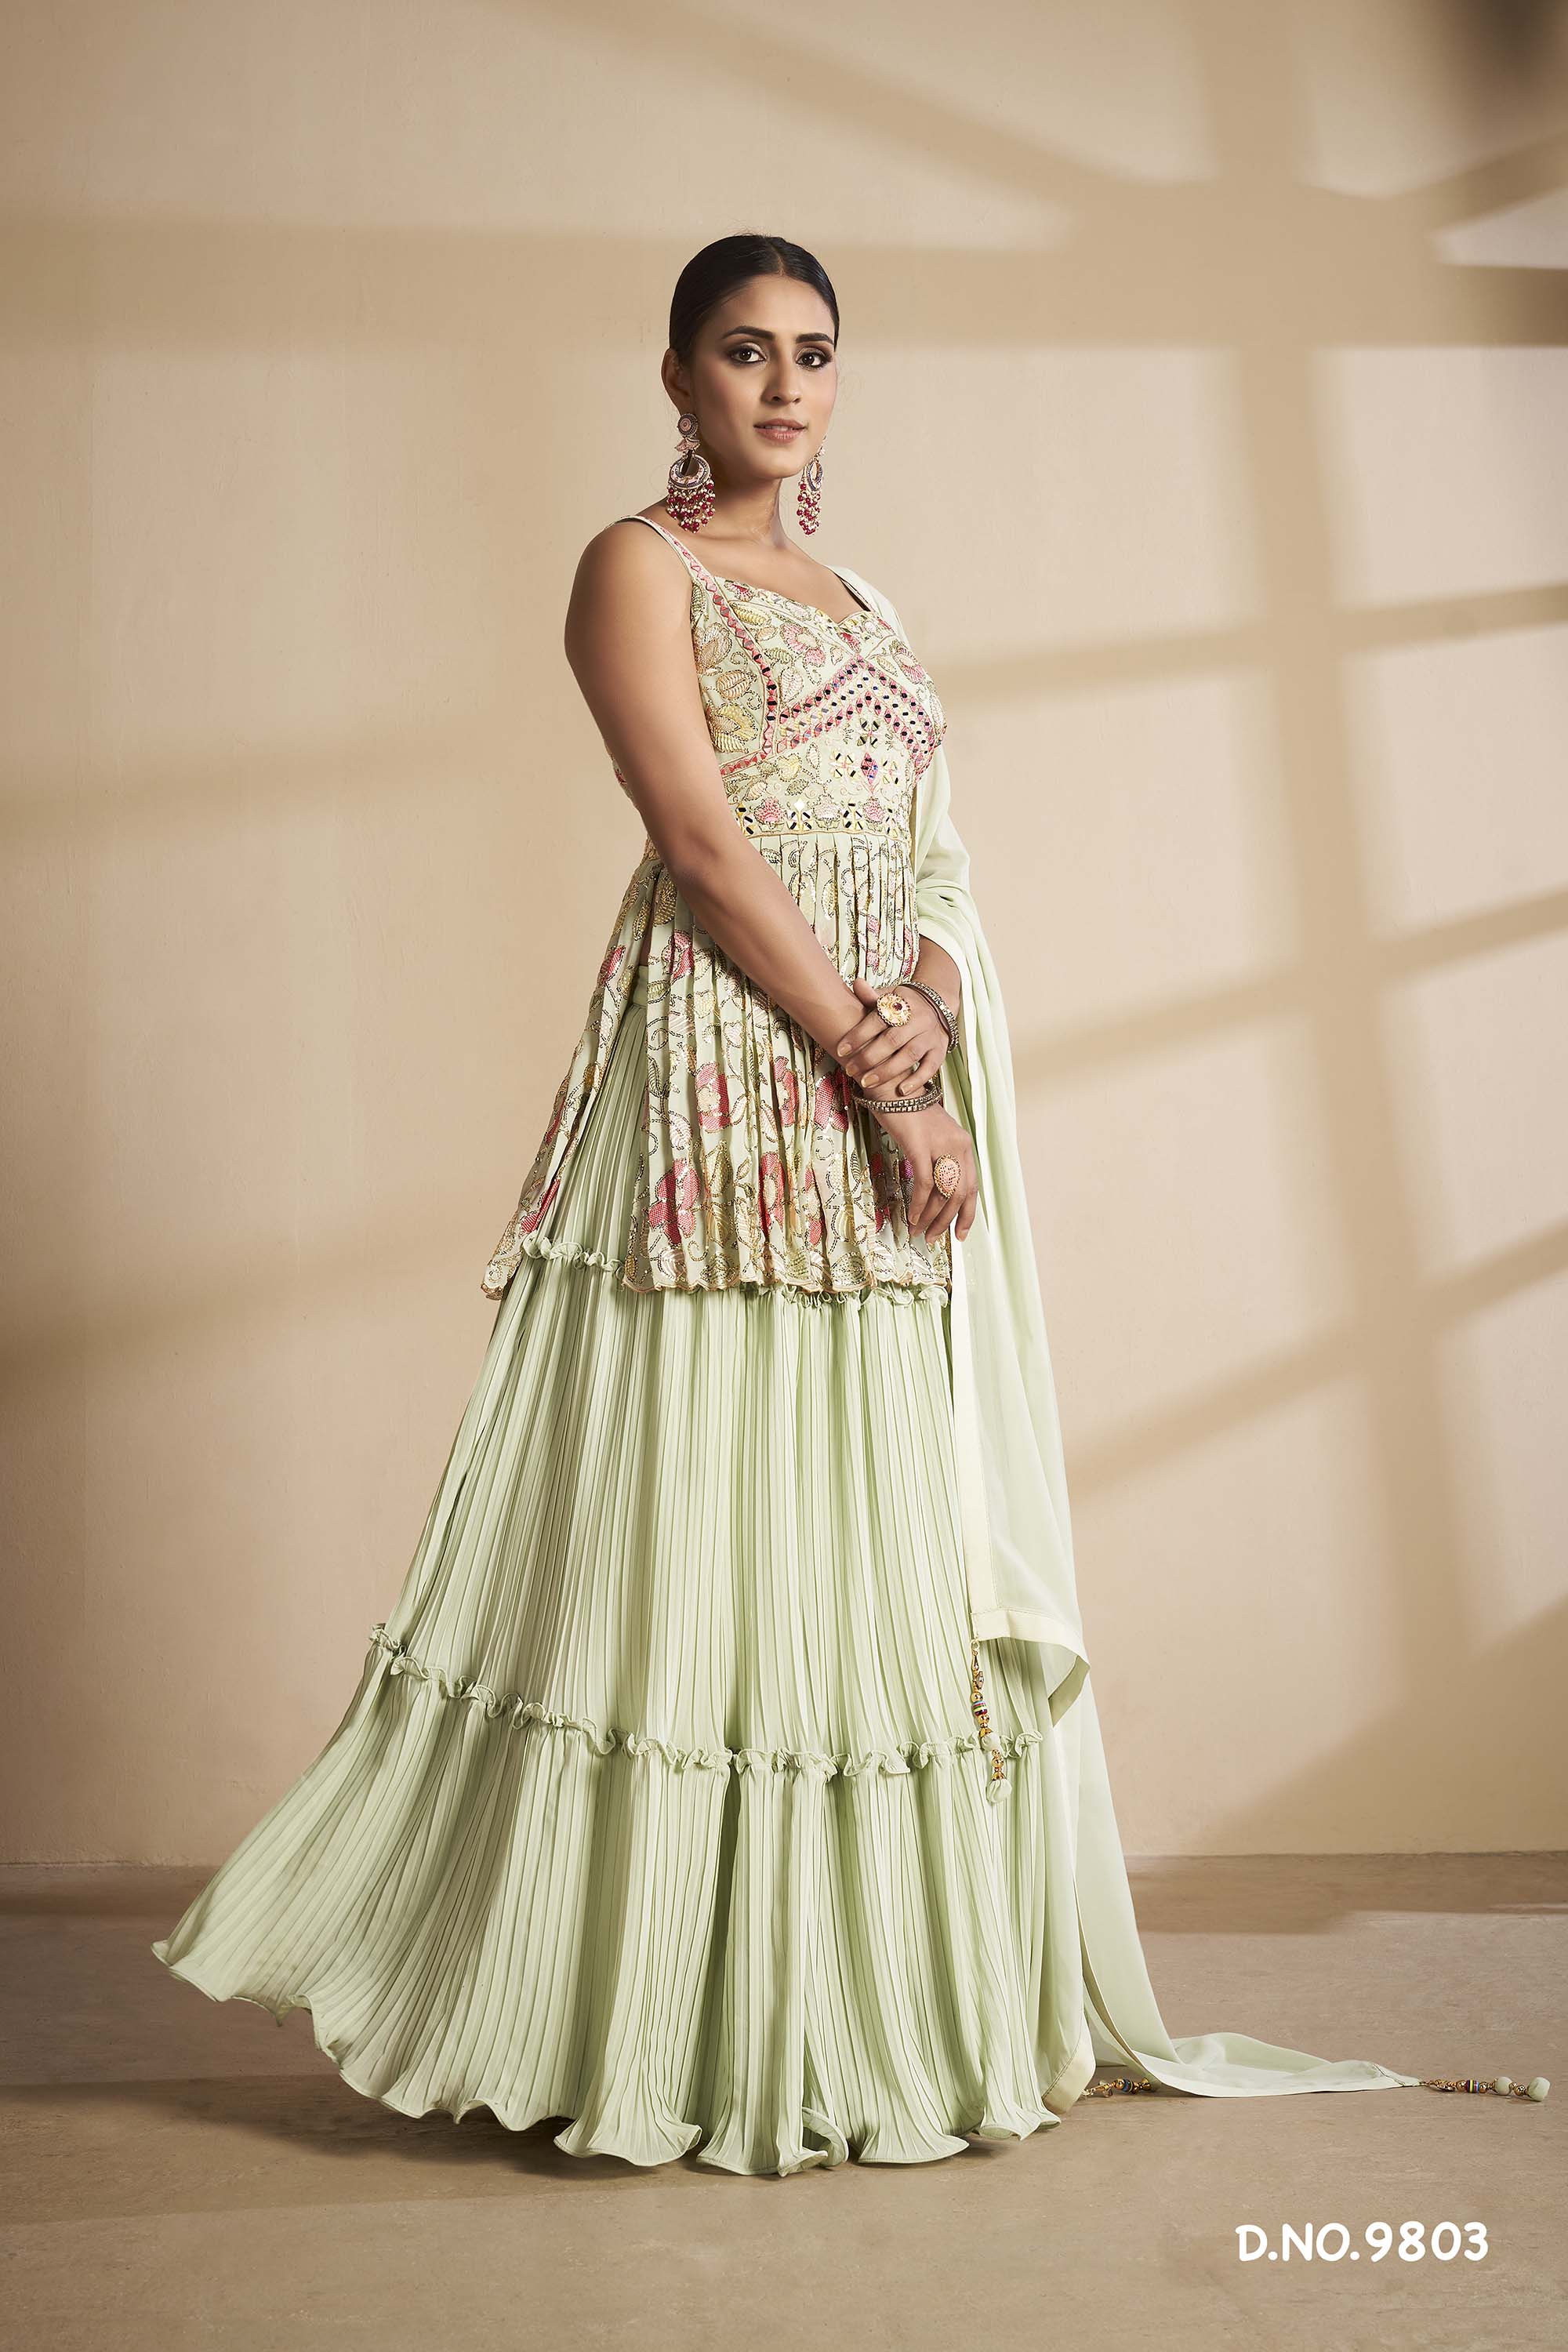 Fashion Ka Fatka - NEW ARRIVAL - #NargisFakhri In Hand Embroidered  #LehengaCholi In The Song 